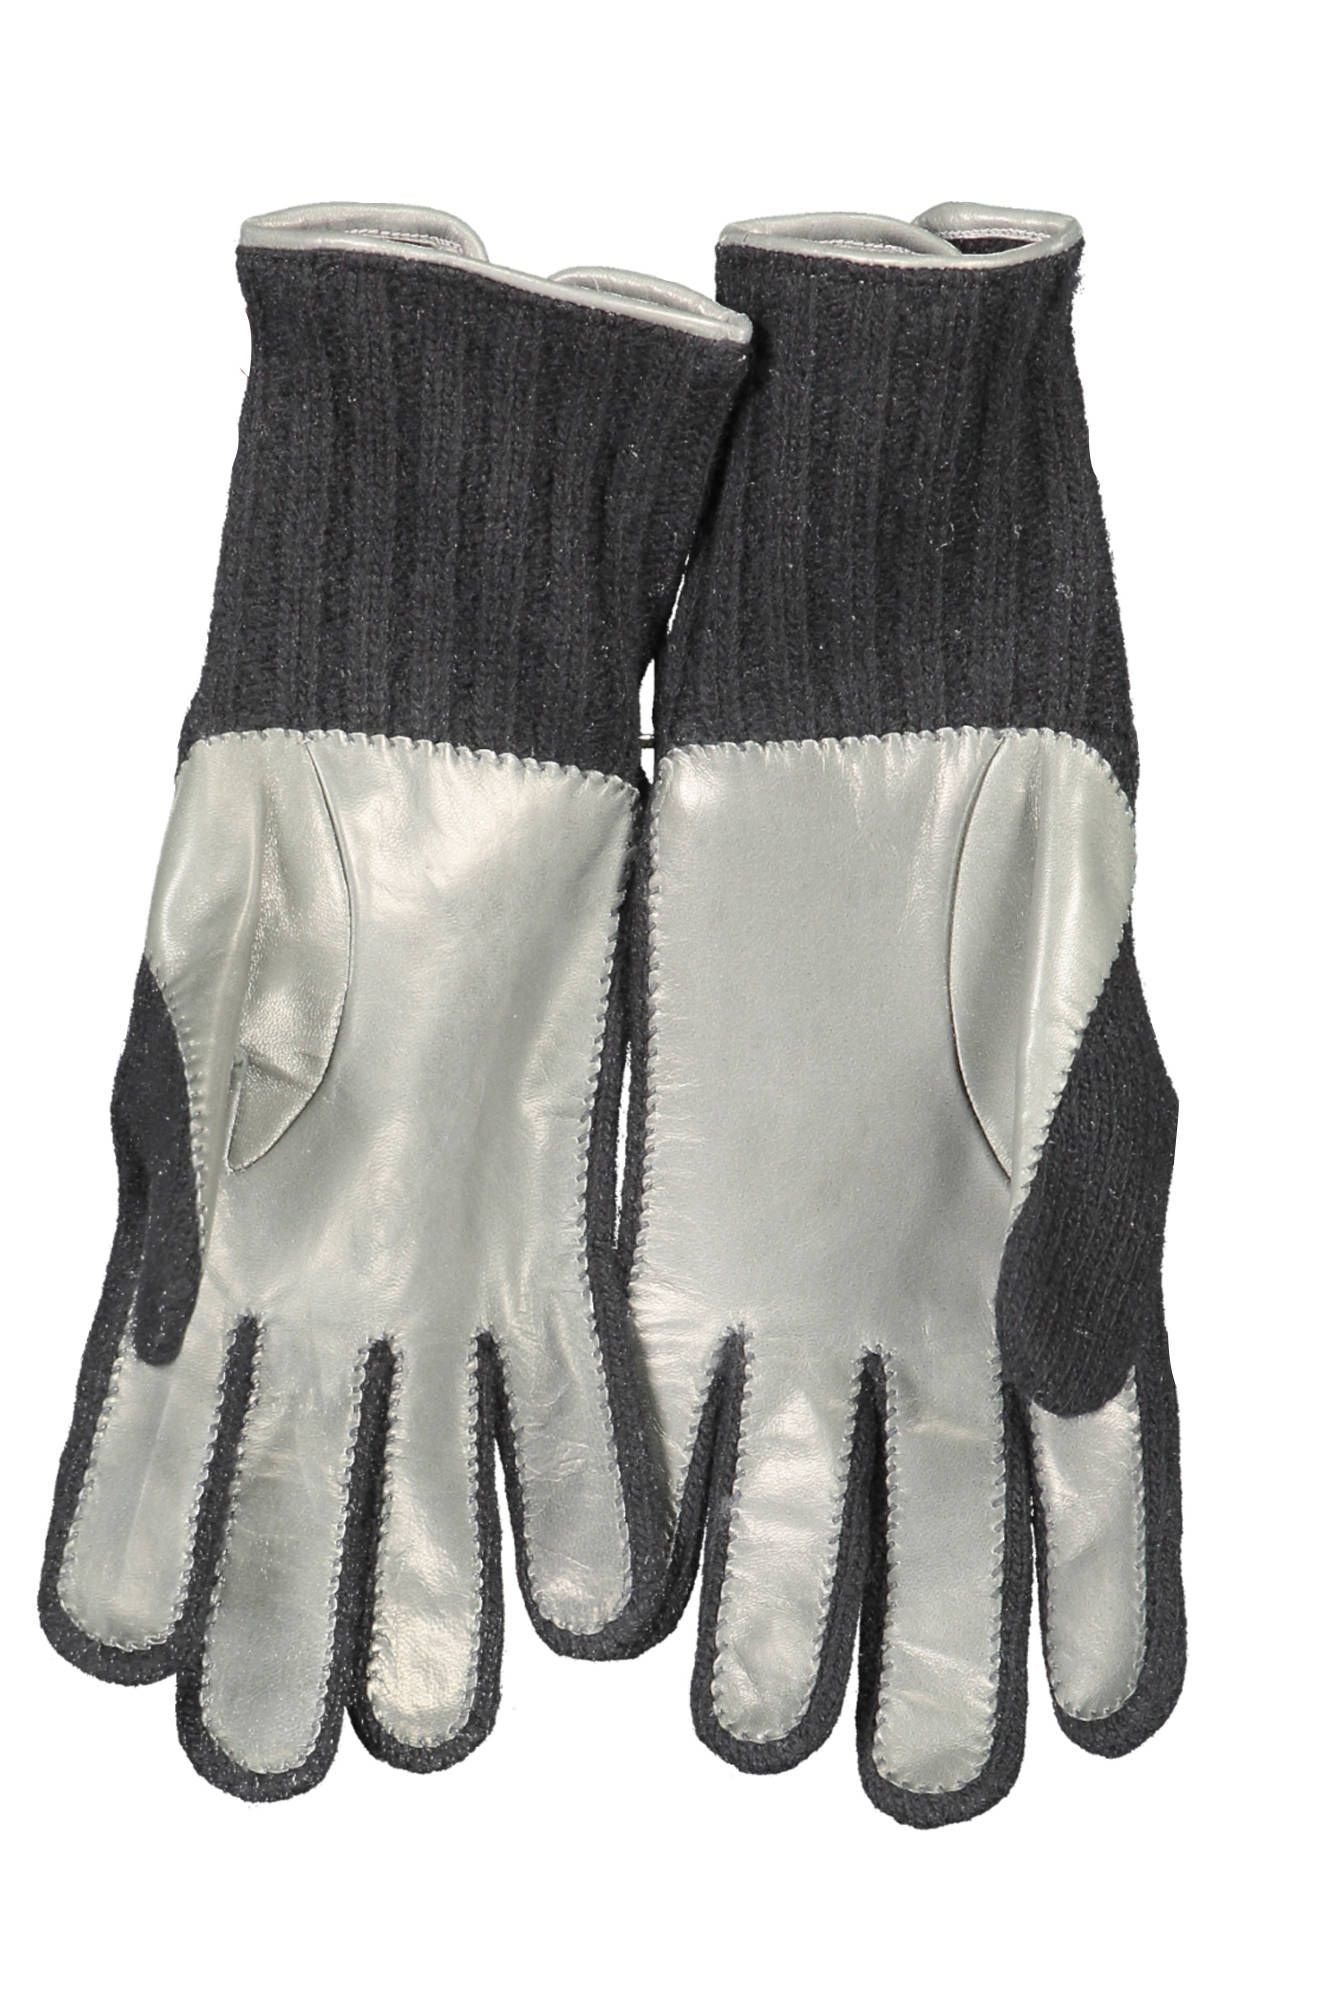 Elegant Wool Gloves with Contrasting Details